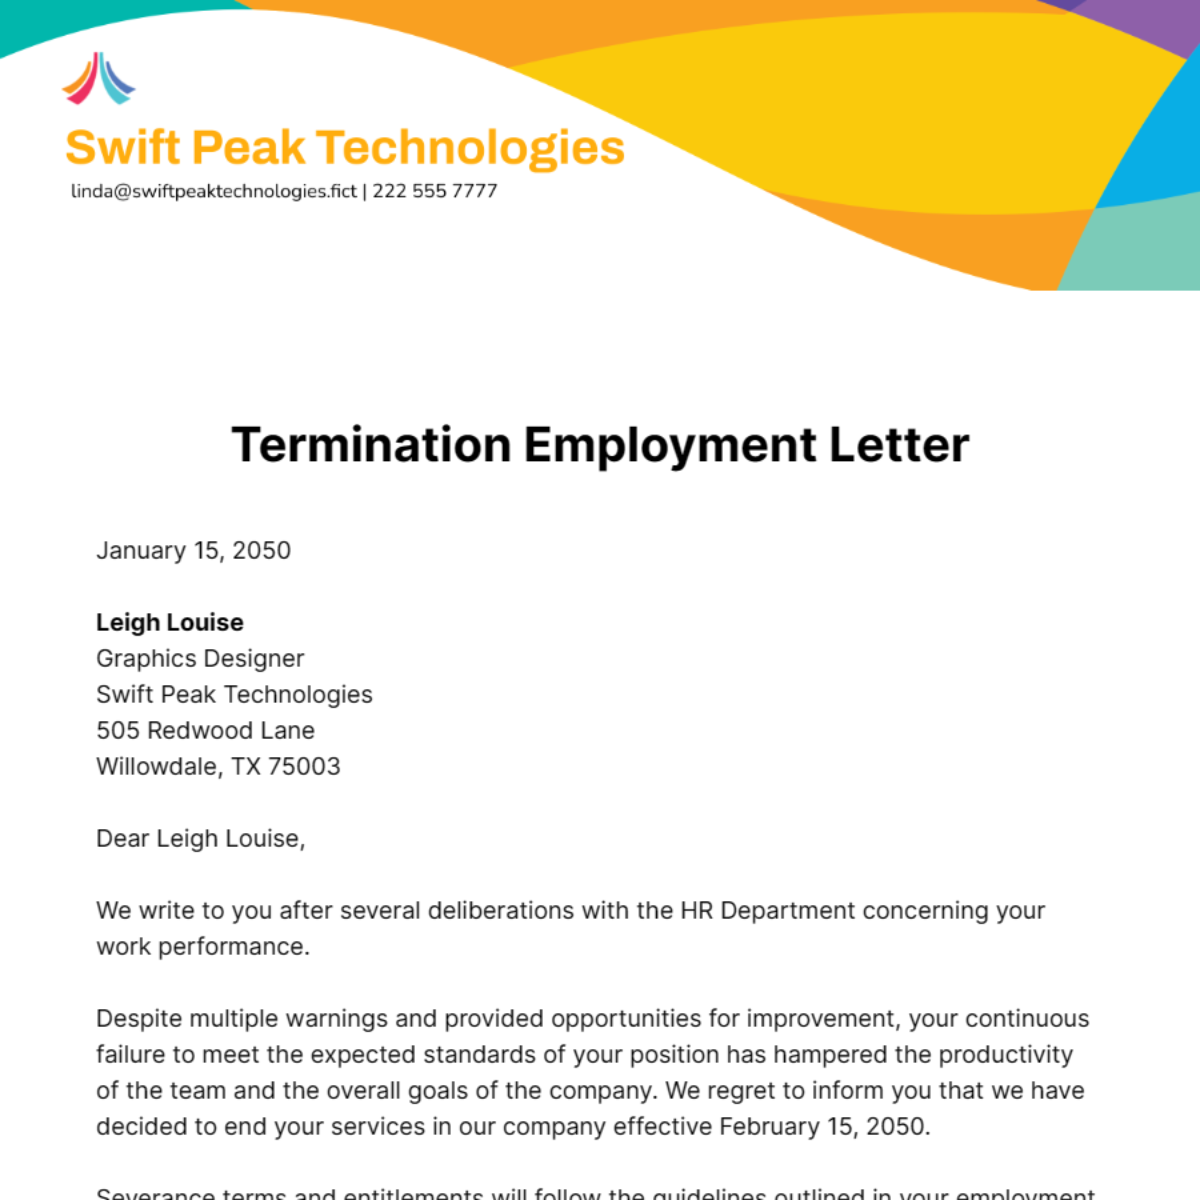 Termination Employment Letter Template